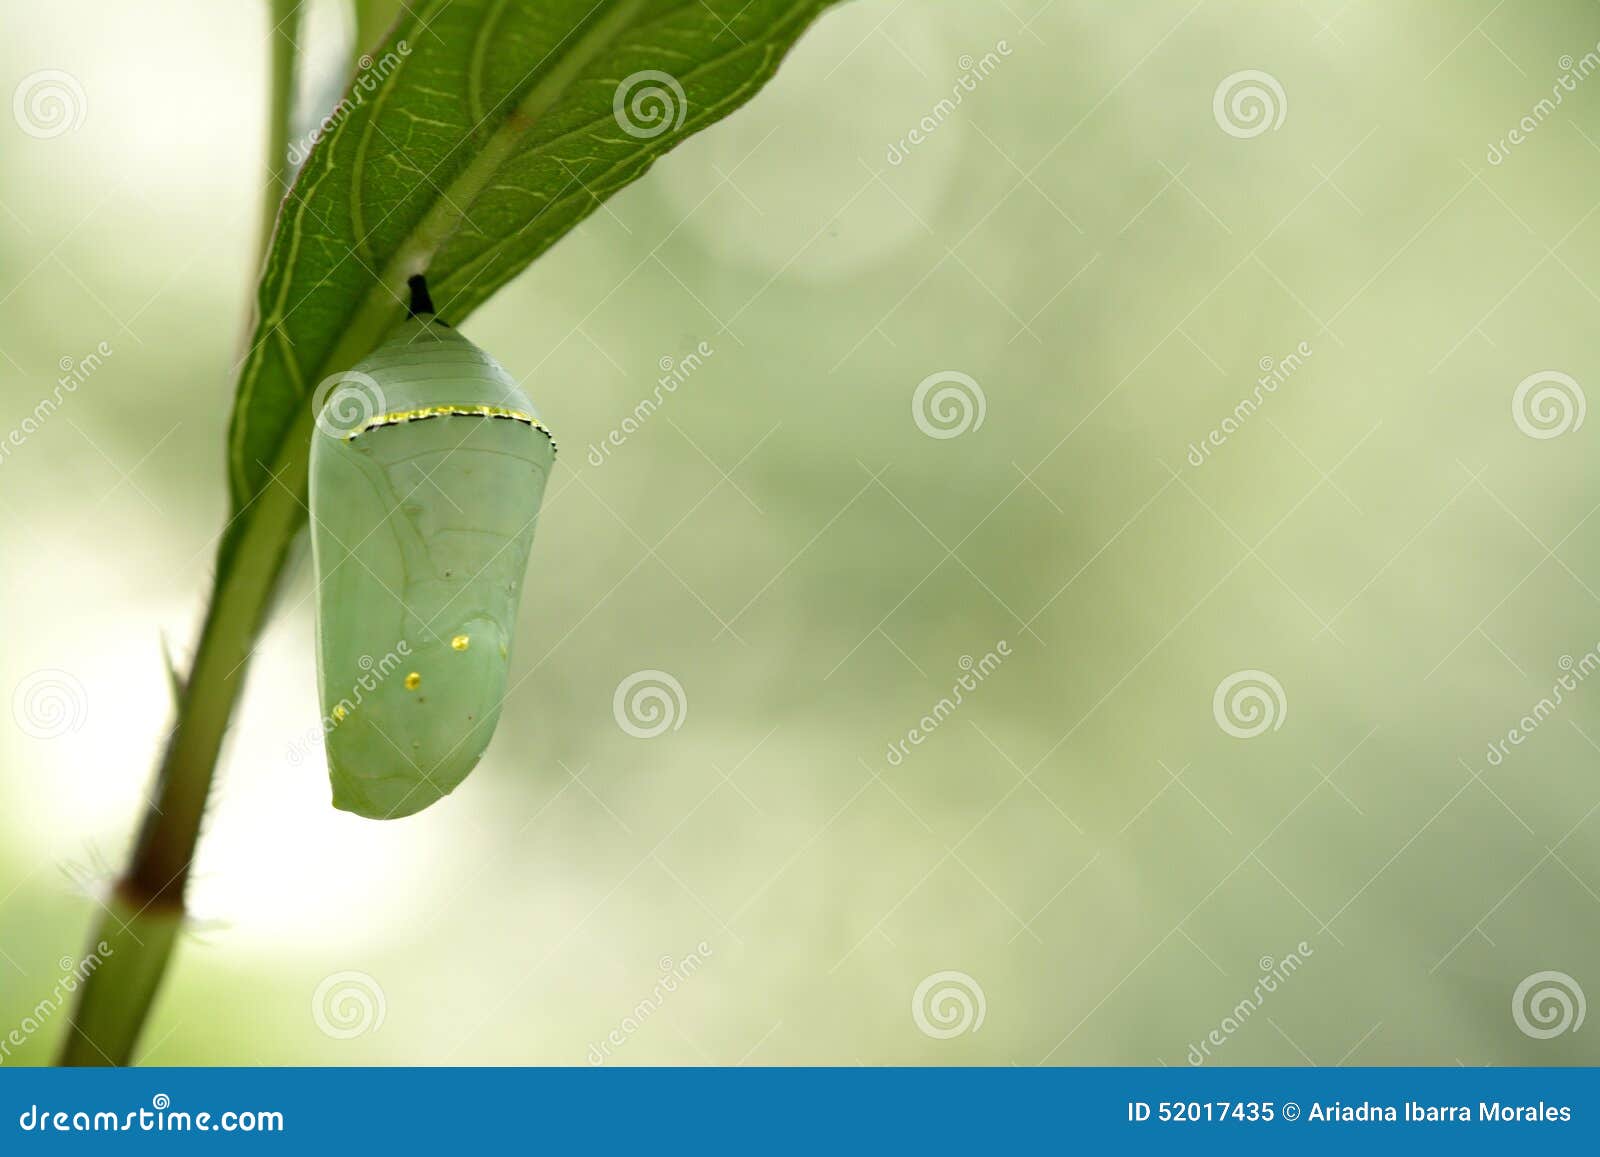 monarch butterfly chrysalis, beautiful cocoon